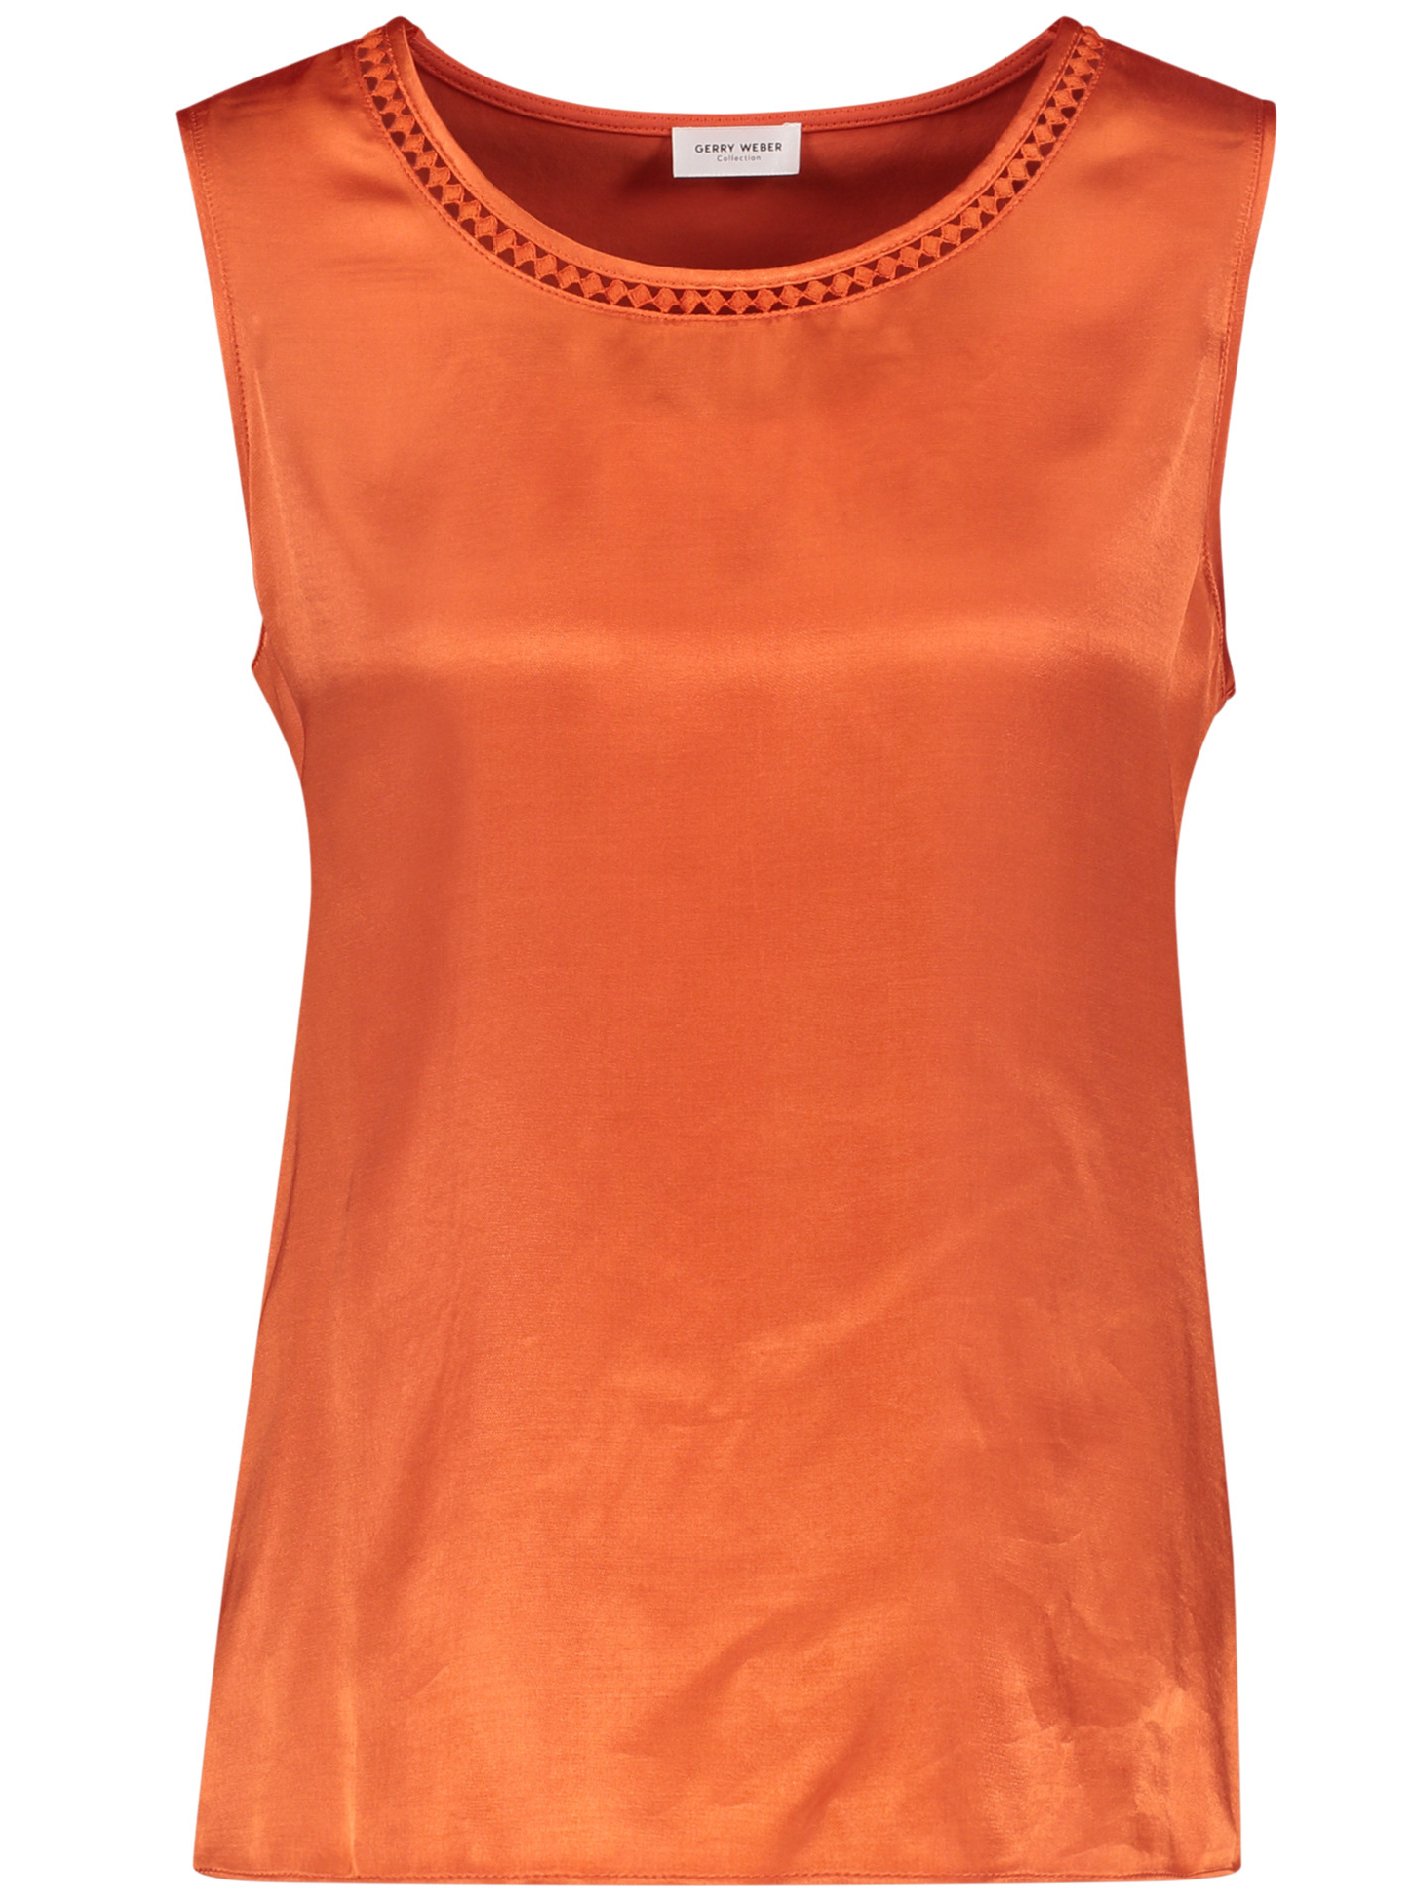 Gerry Weber Orange Knitted Jersey Top